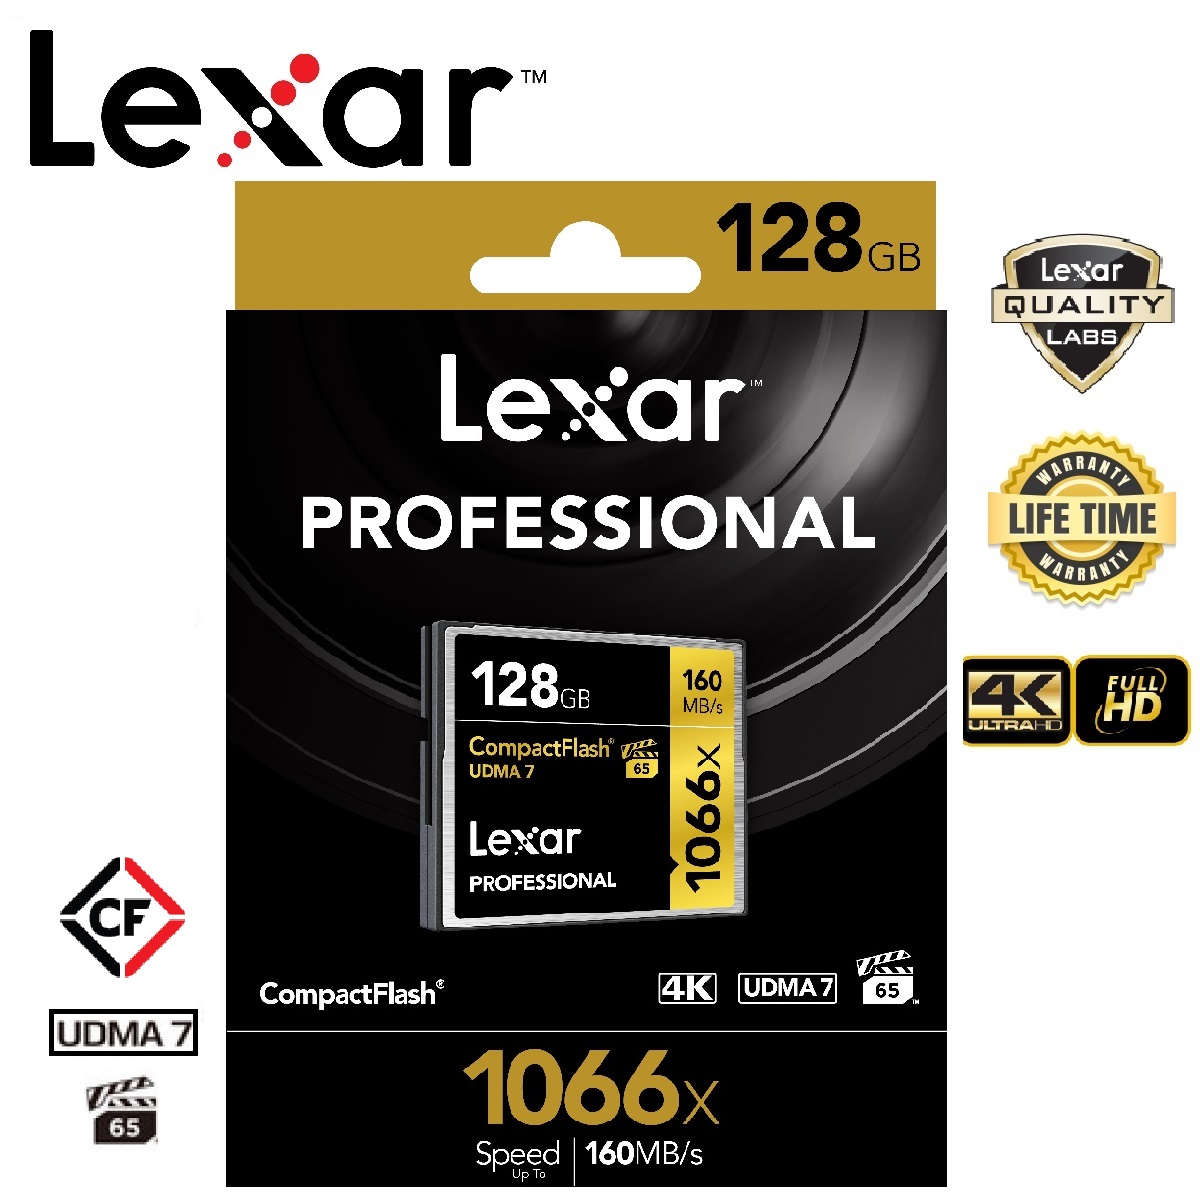 Lexar 128GB 1066x (160MB/s) Compact Flash Professional